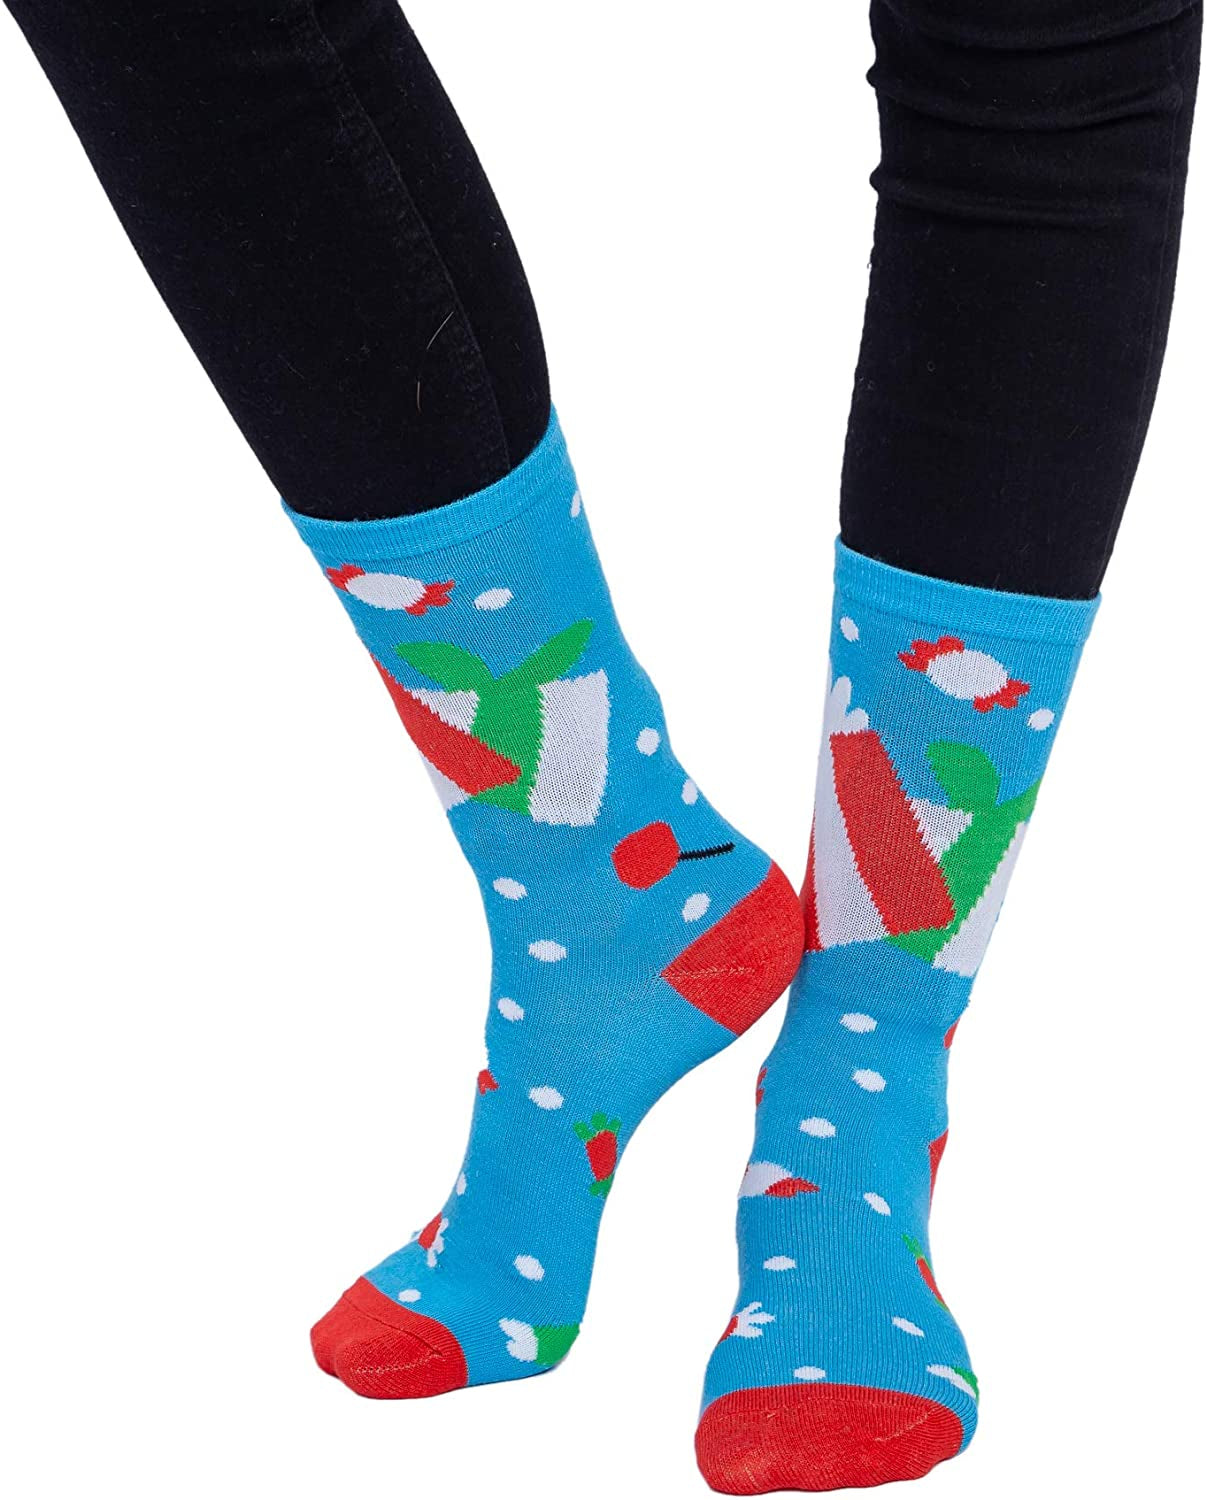 12 Pairs Warm Soft Cotton Christmas Socks Set